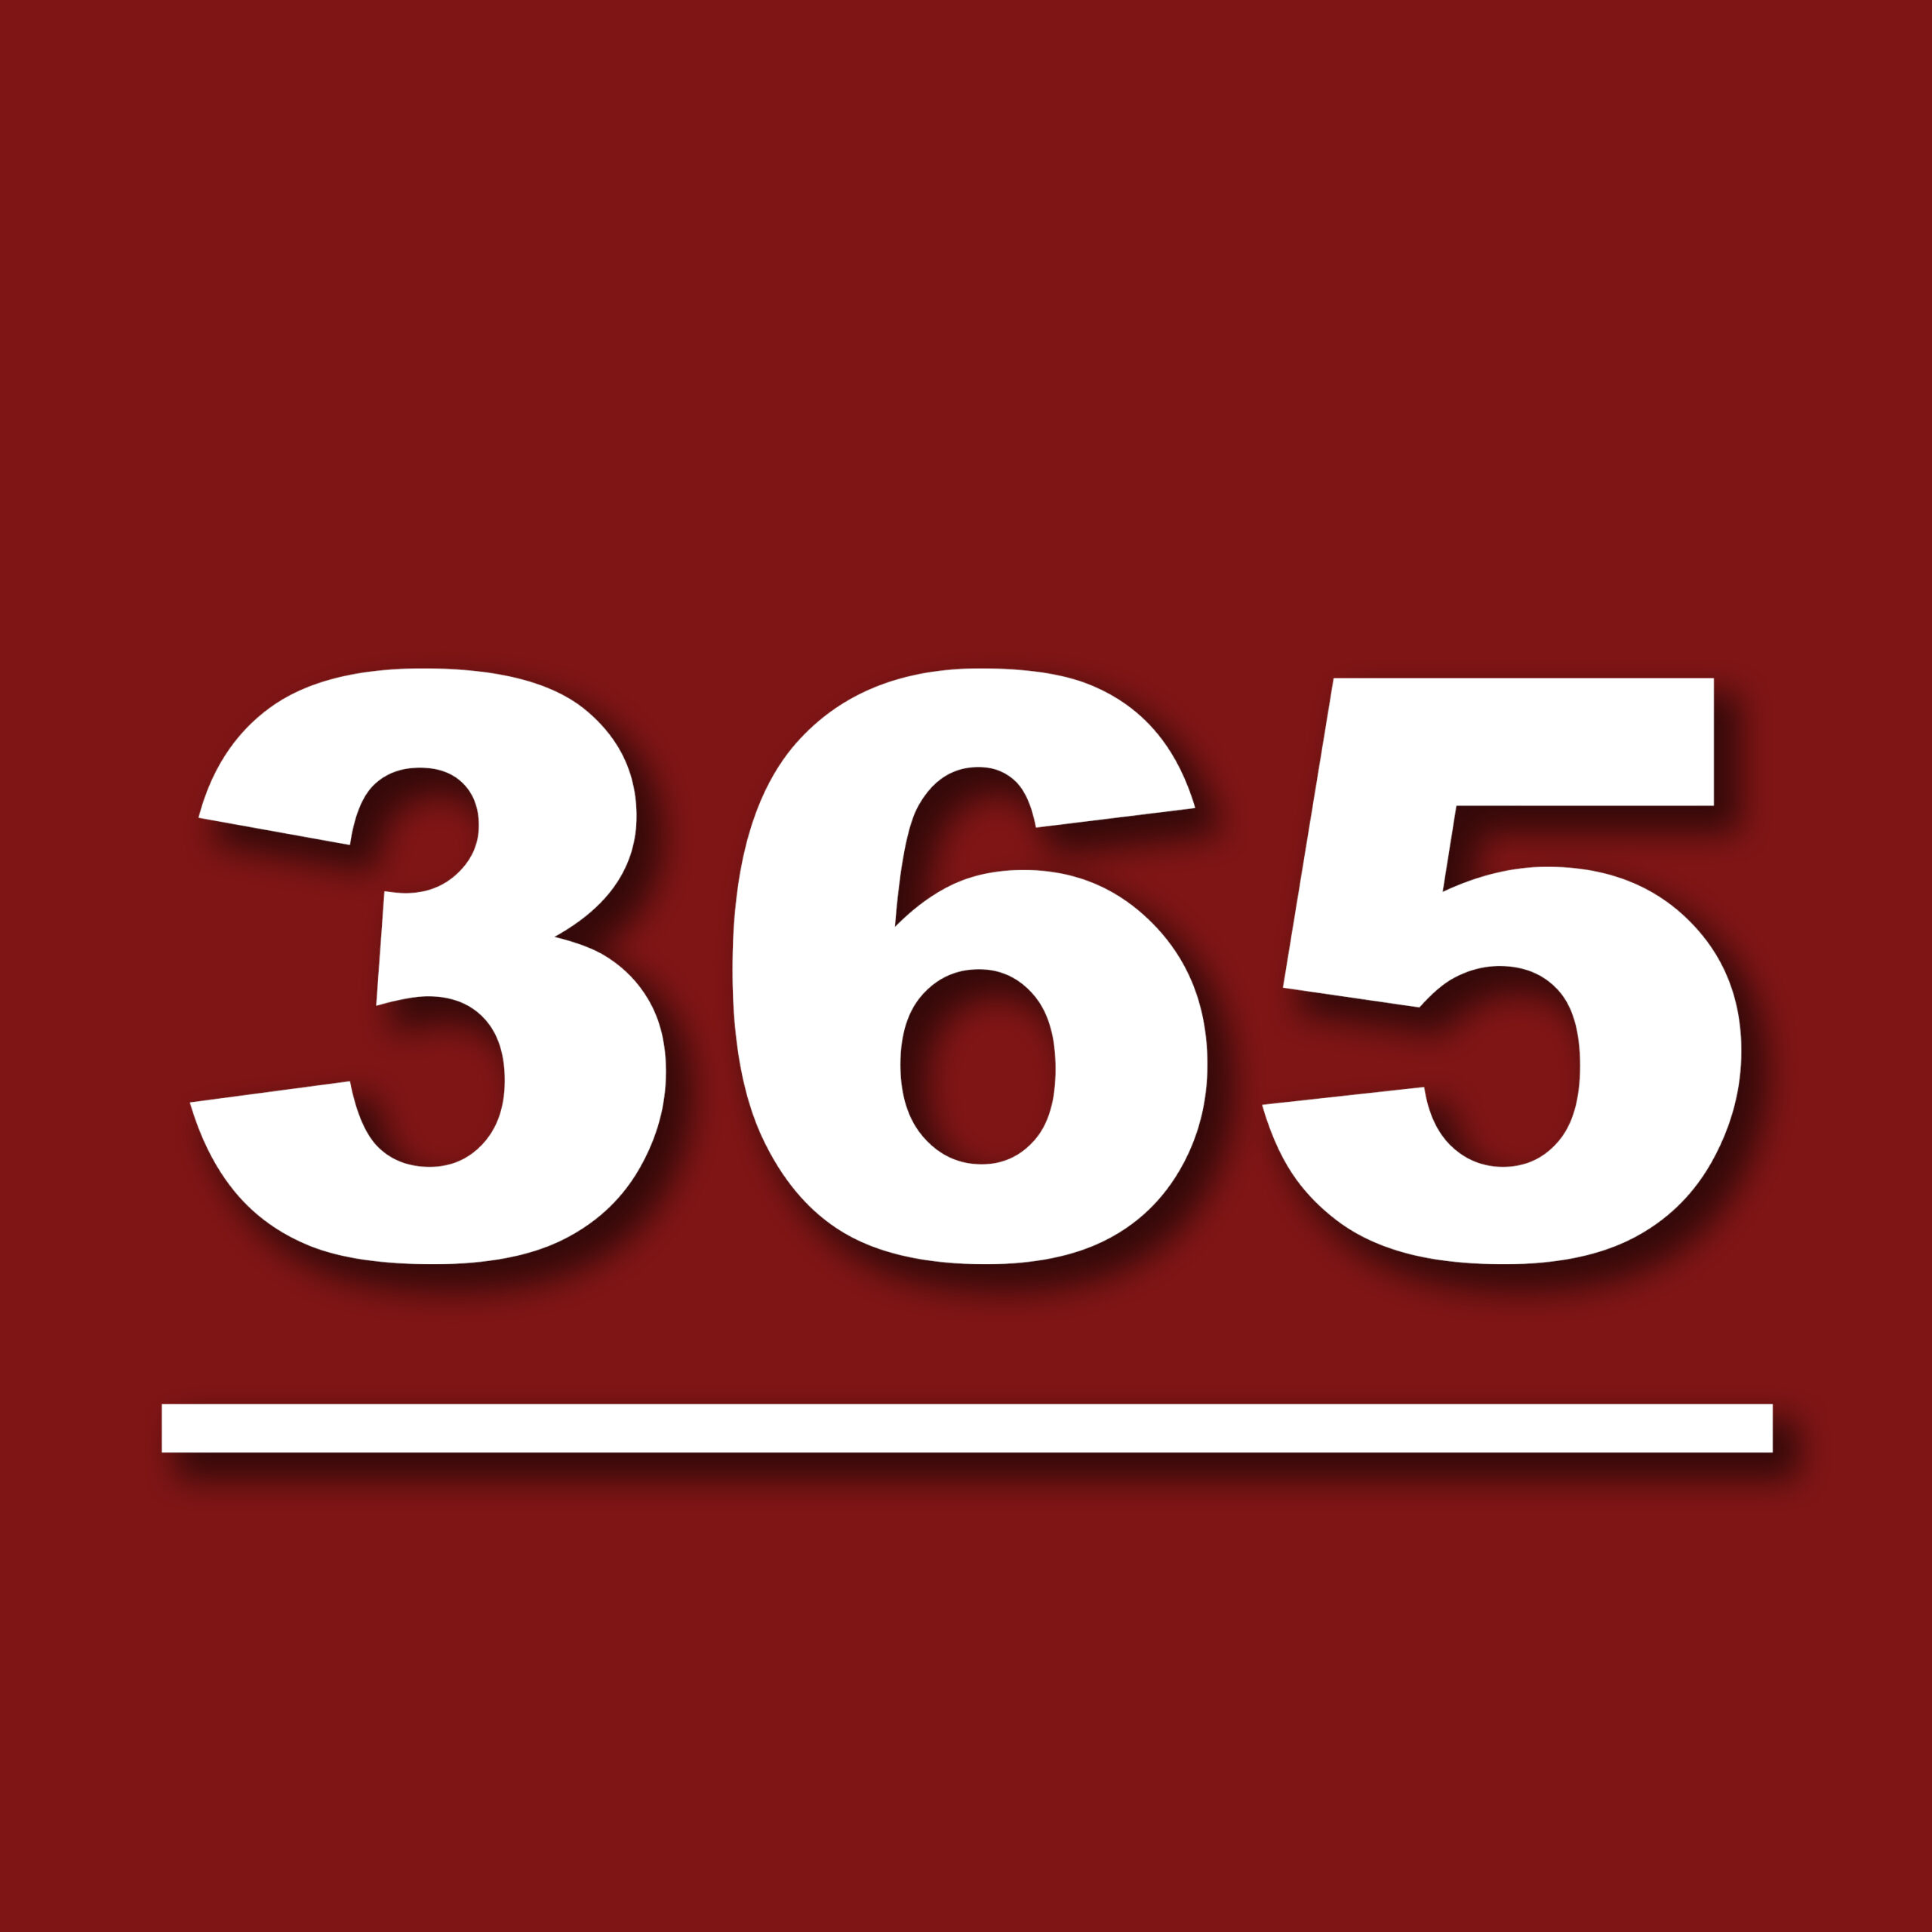 365 number logo red copy